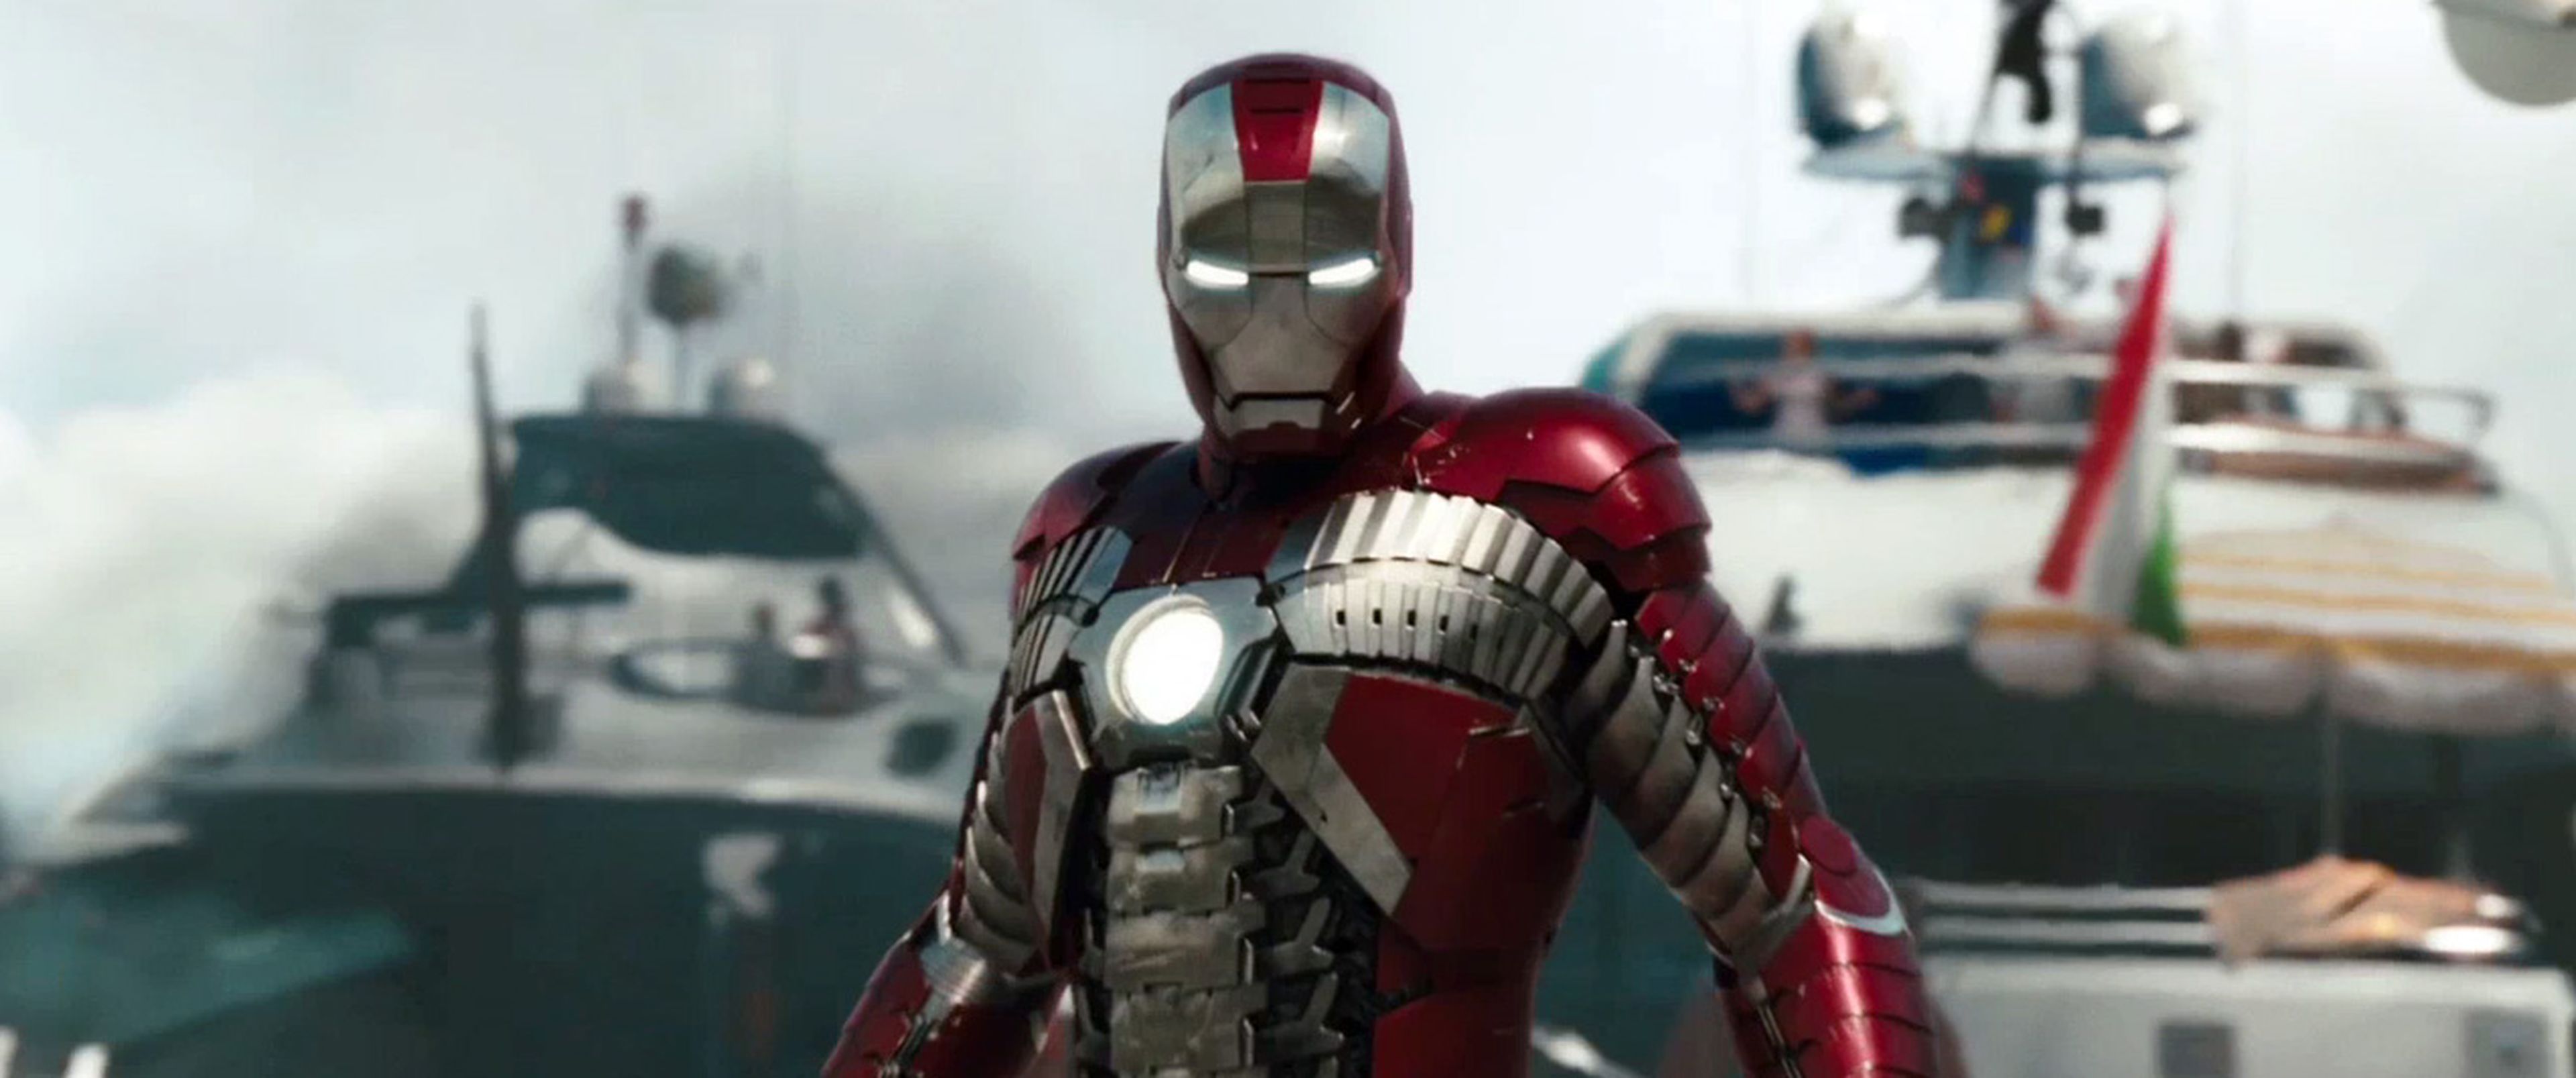 Iron Man Mark V - Iron Man 2 (2010)